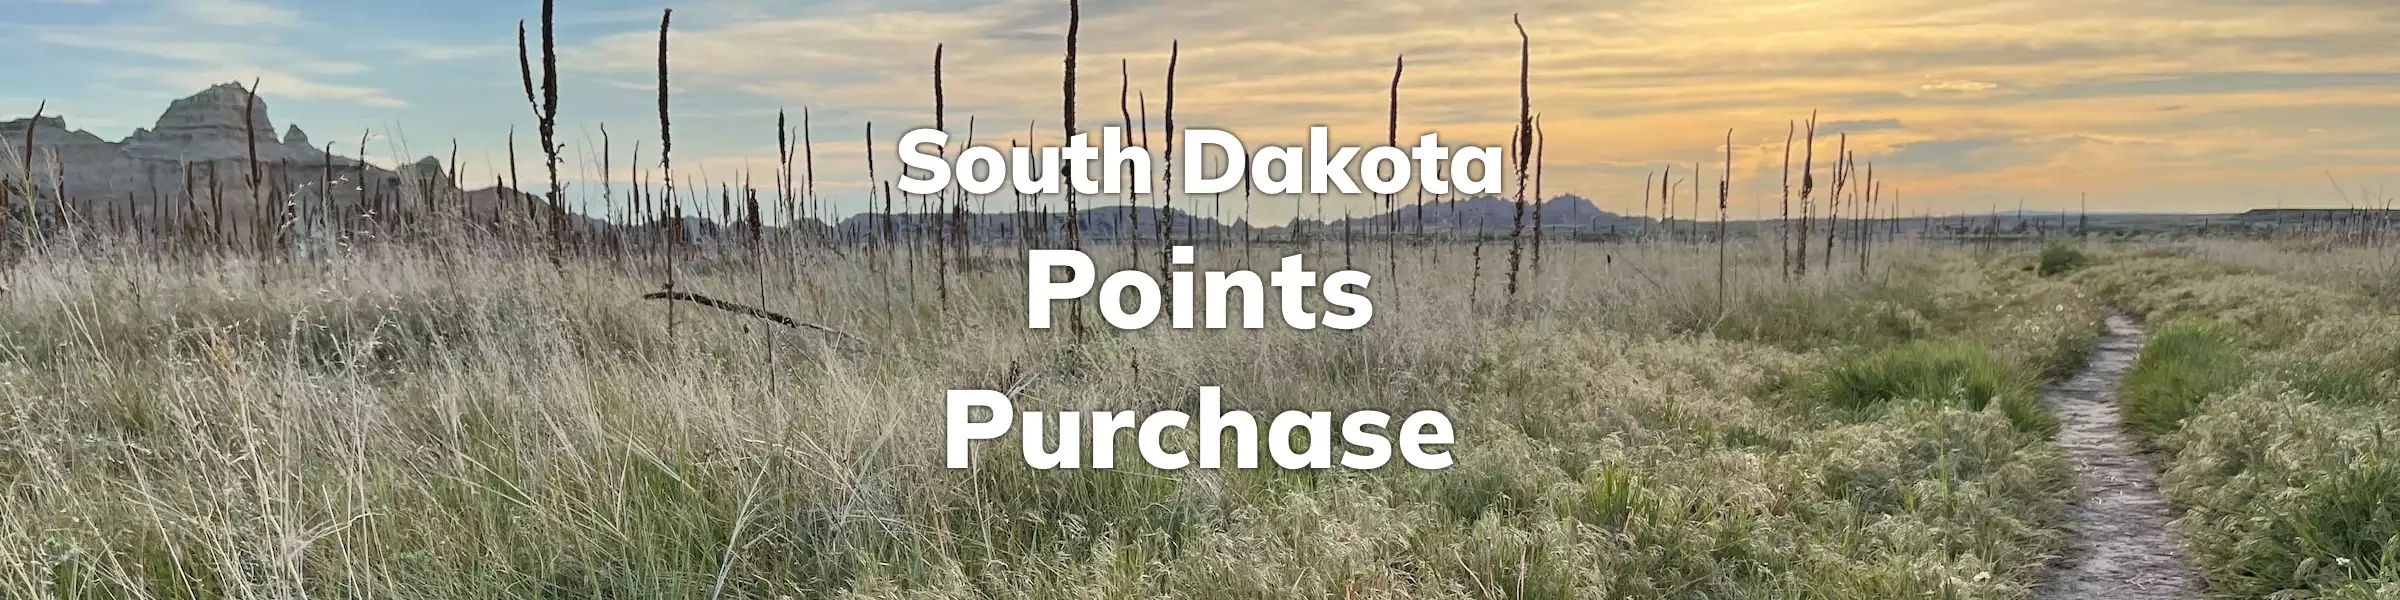 South Dakota Points Purchase